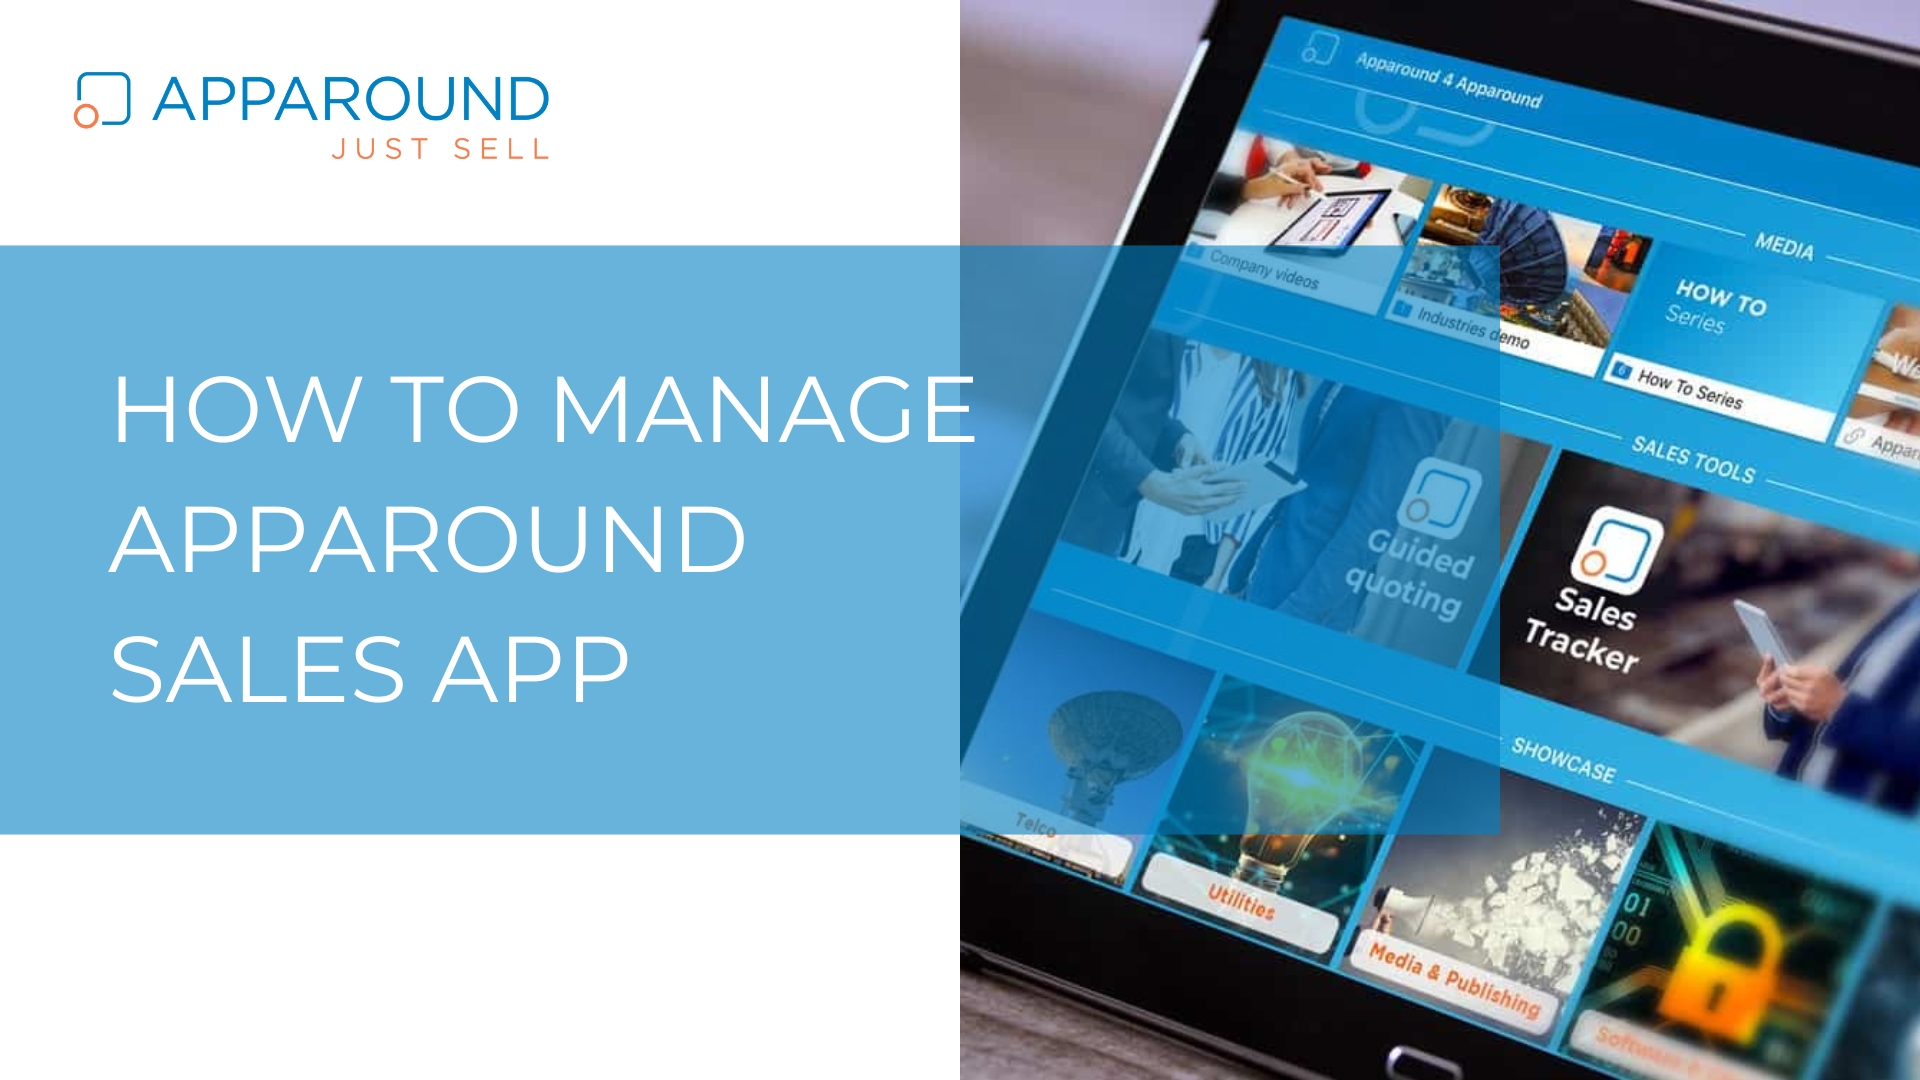 Apparound_Video_How_To_Manage_Apparound_Sales_App